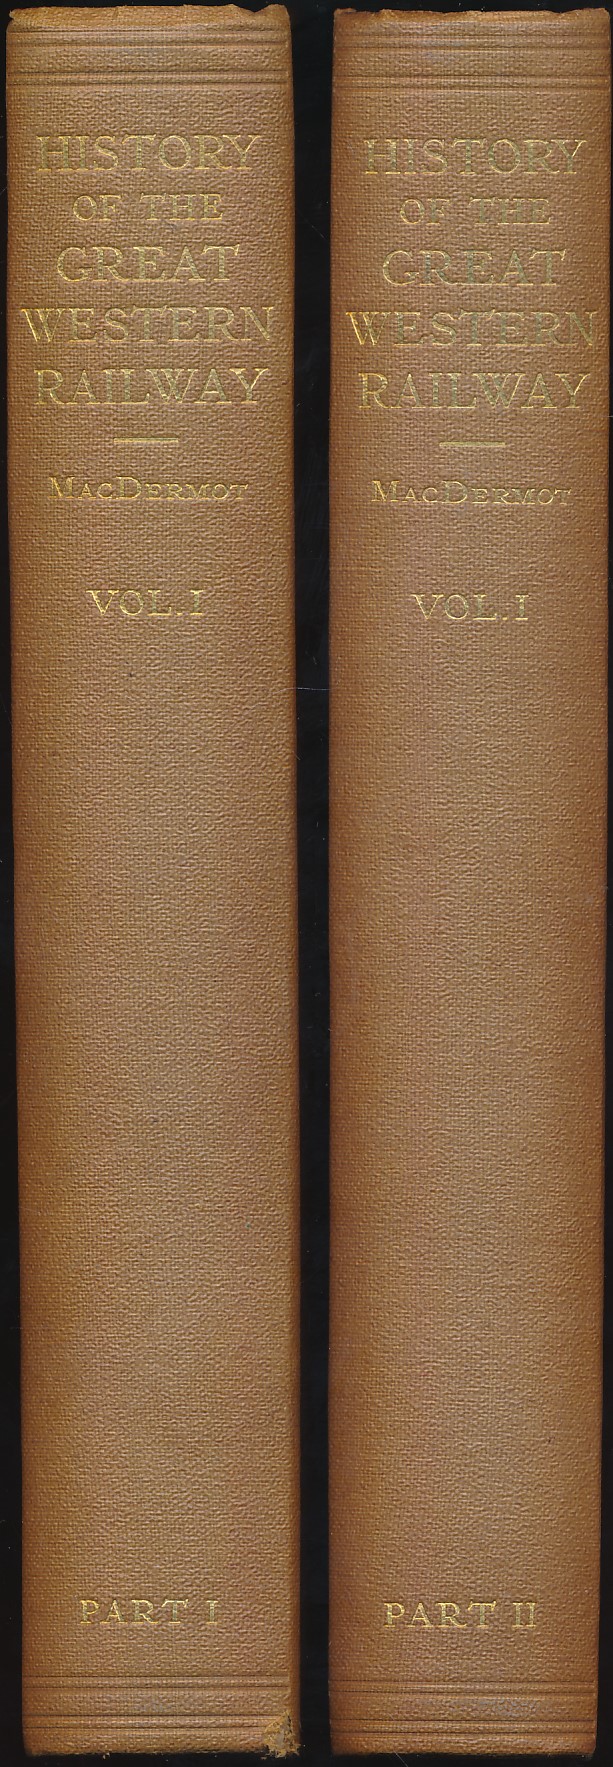 History of the Great Western Railway. Volume 1 1833-1863. Parts I & II. 2 volume set. 1927.